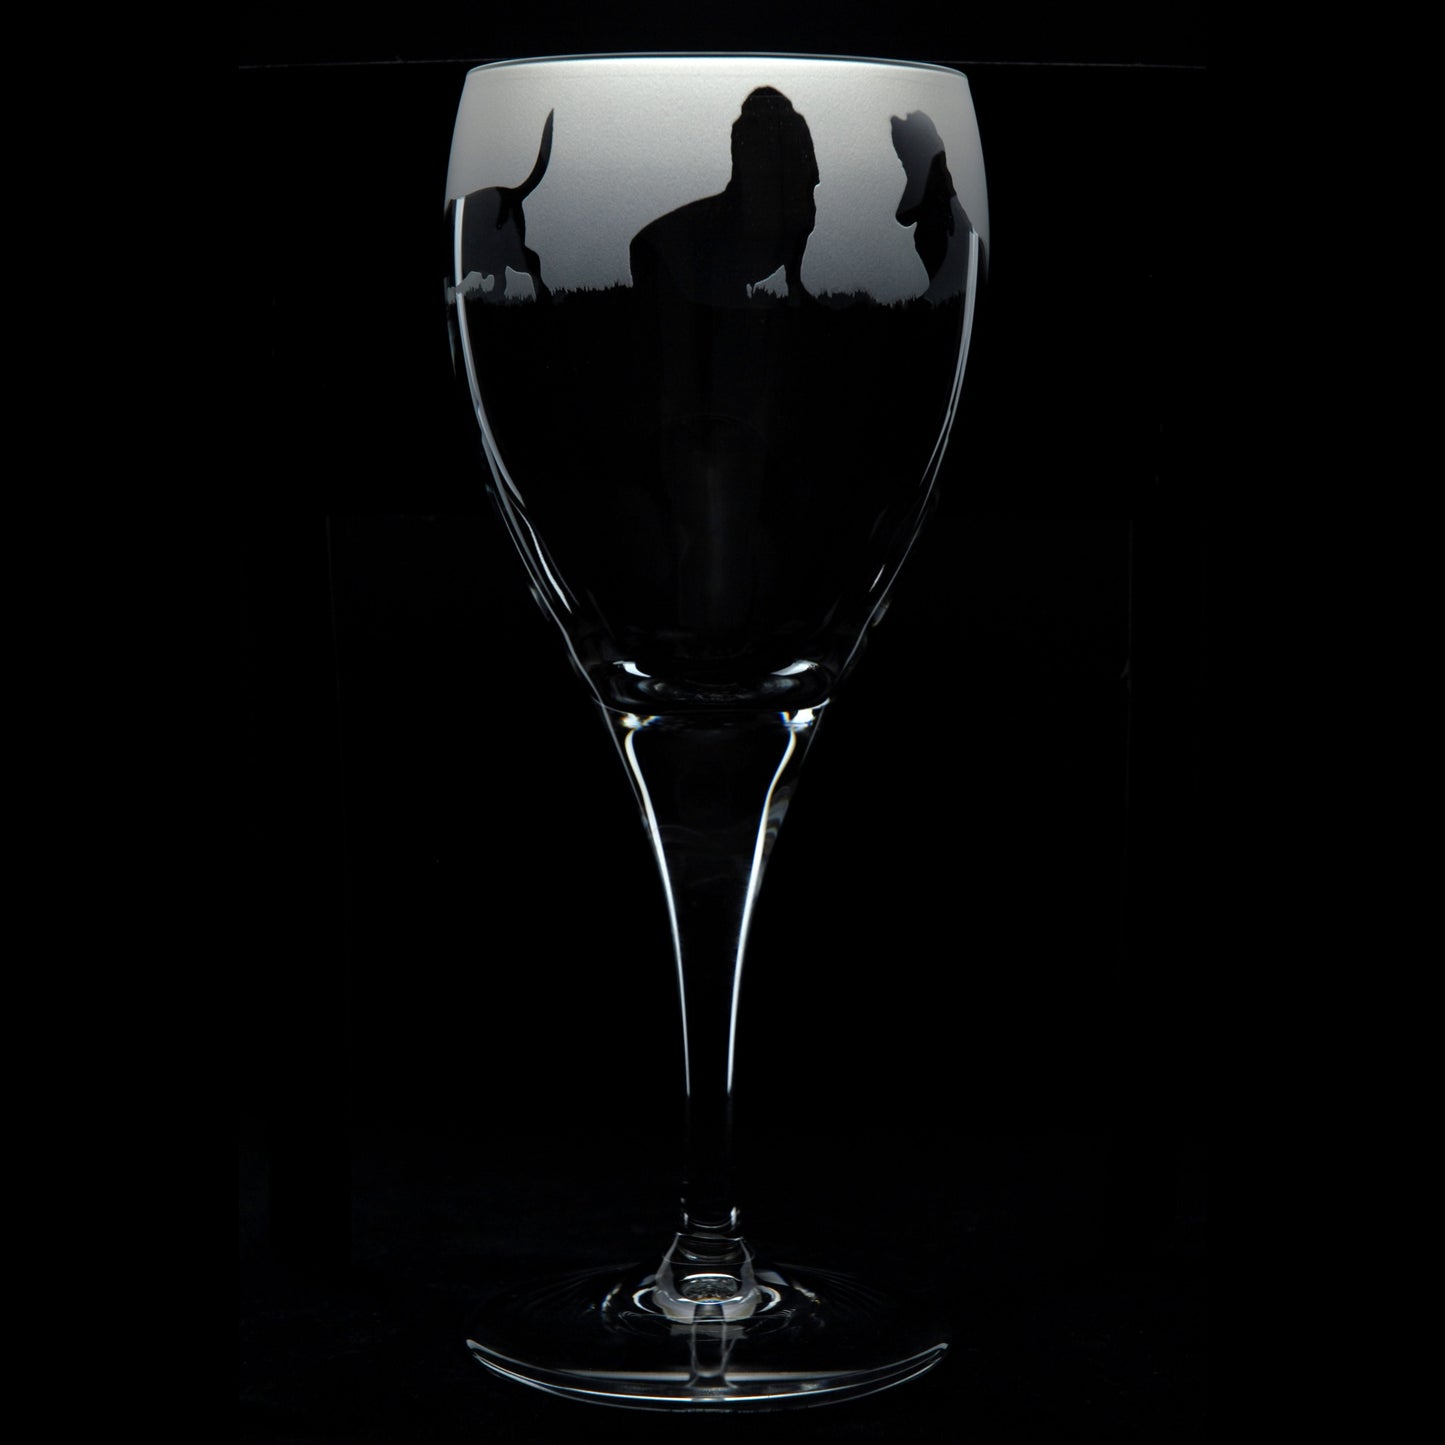 Basset Hound Dog Crystal Wine Glass - Hand Etched/Engraved Gift